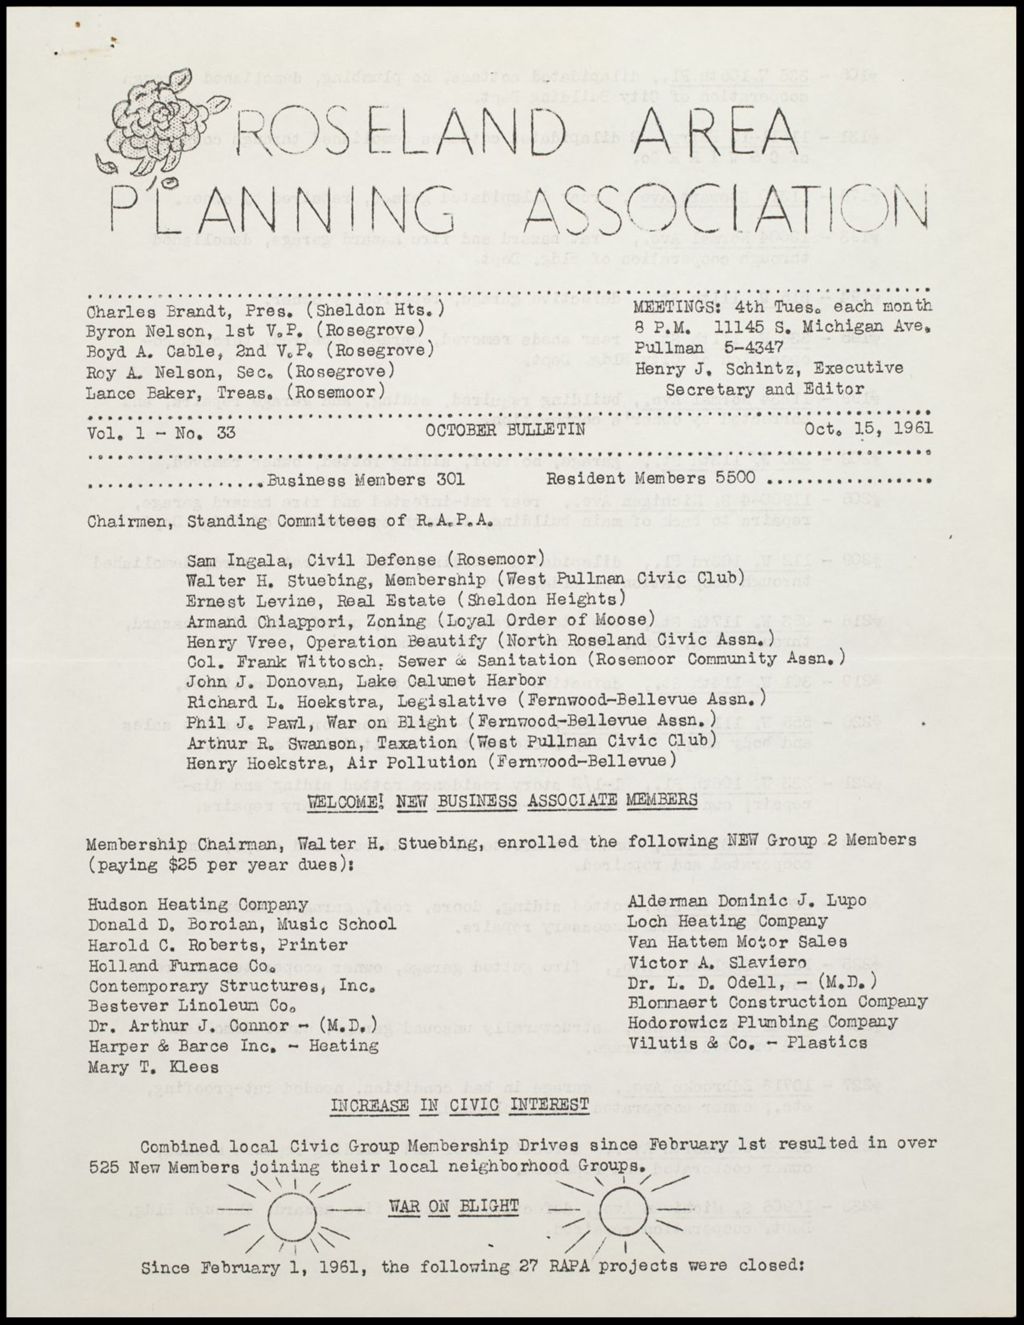 Miniature of Roseland Area Planning Association (Folder 182)